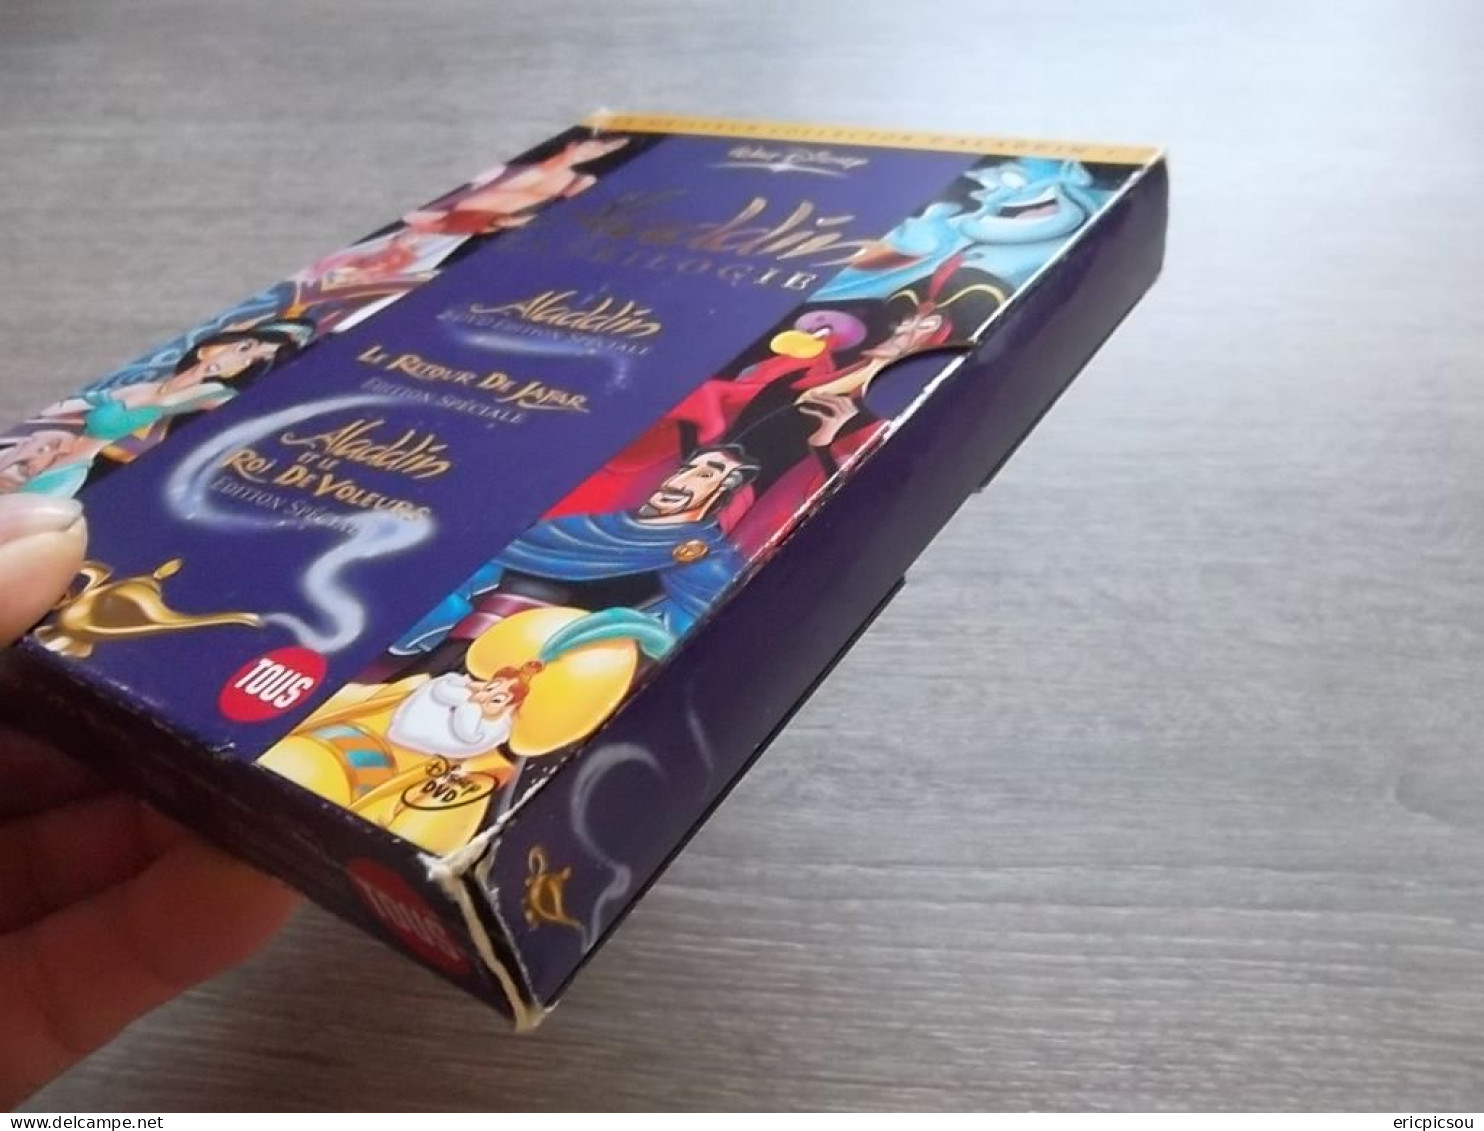 ALADDIN ( LA TRILOGIE ) (Disney ) 4 DVD Coffret Collector